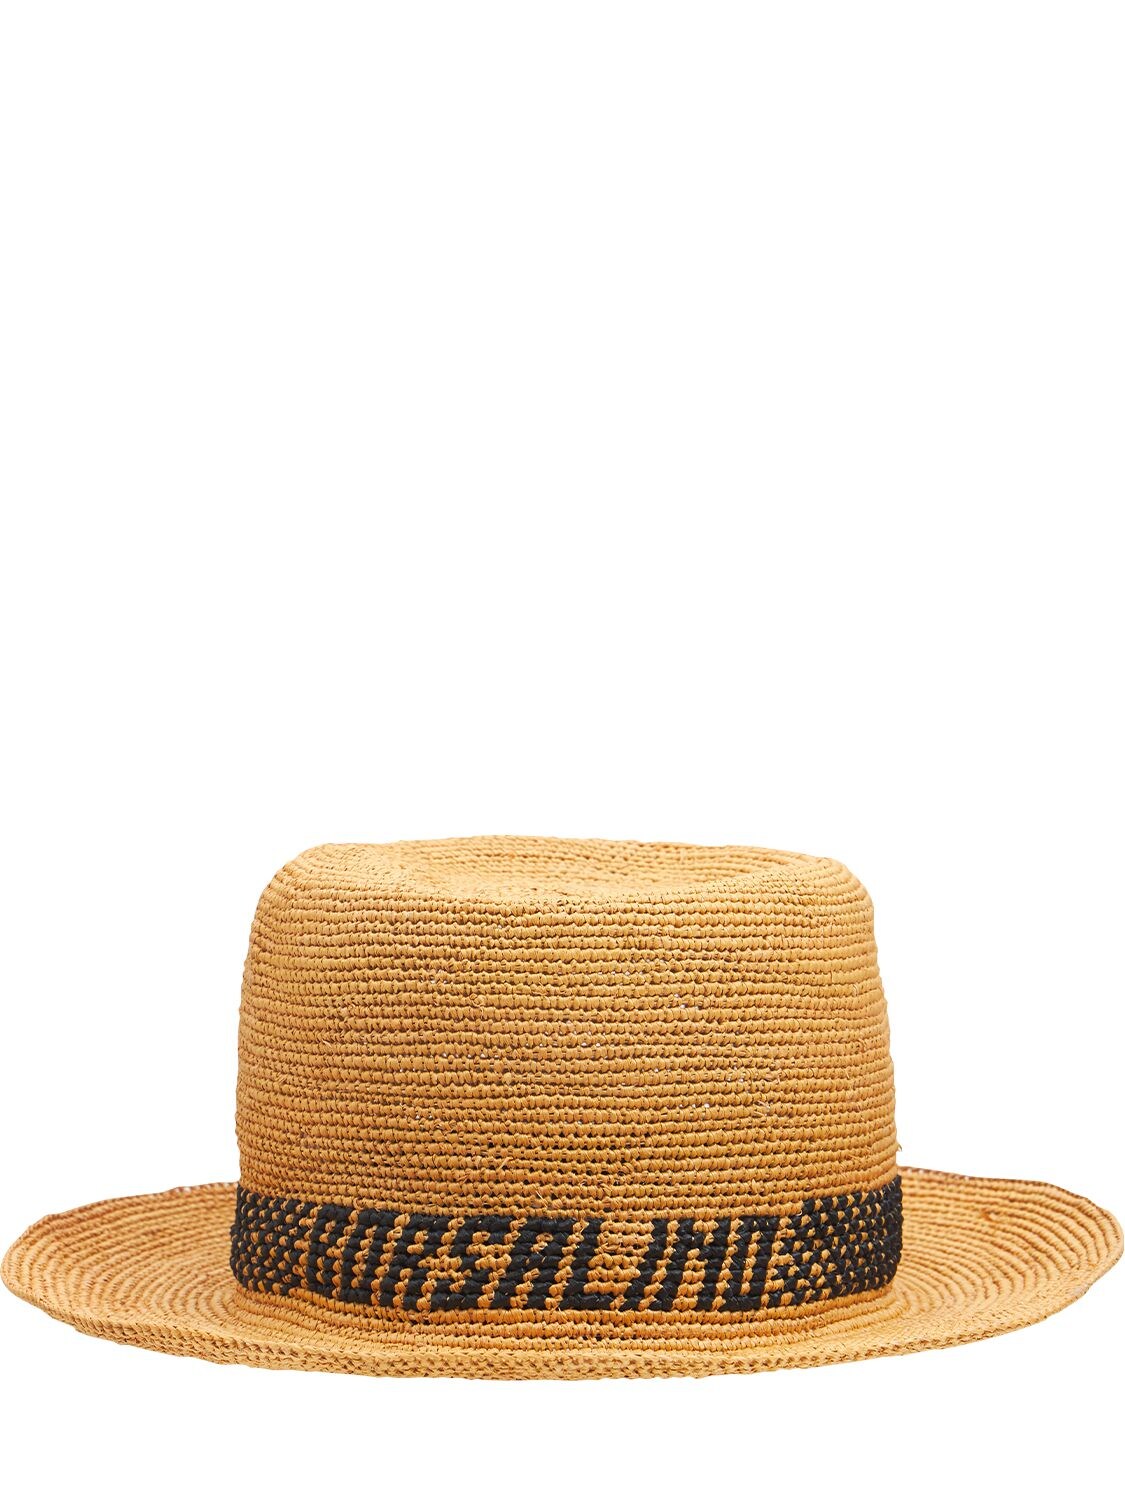 BORSALINO Logo Straw Panama Hat